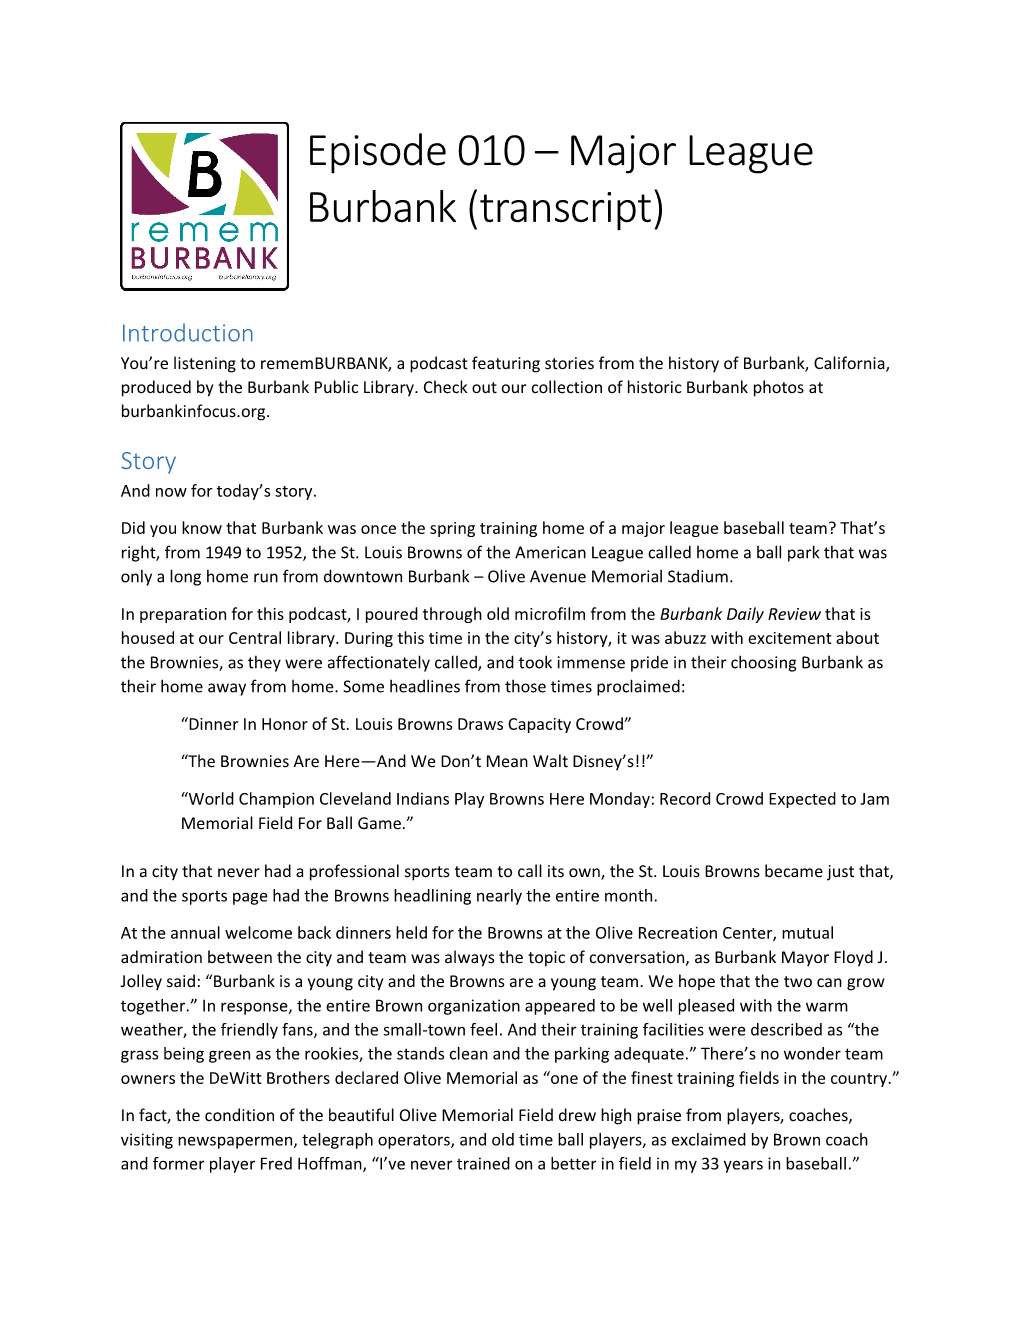 Major League Burbank (Transcript)